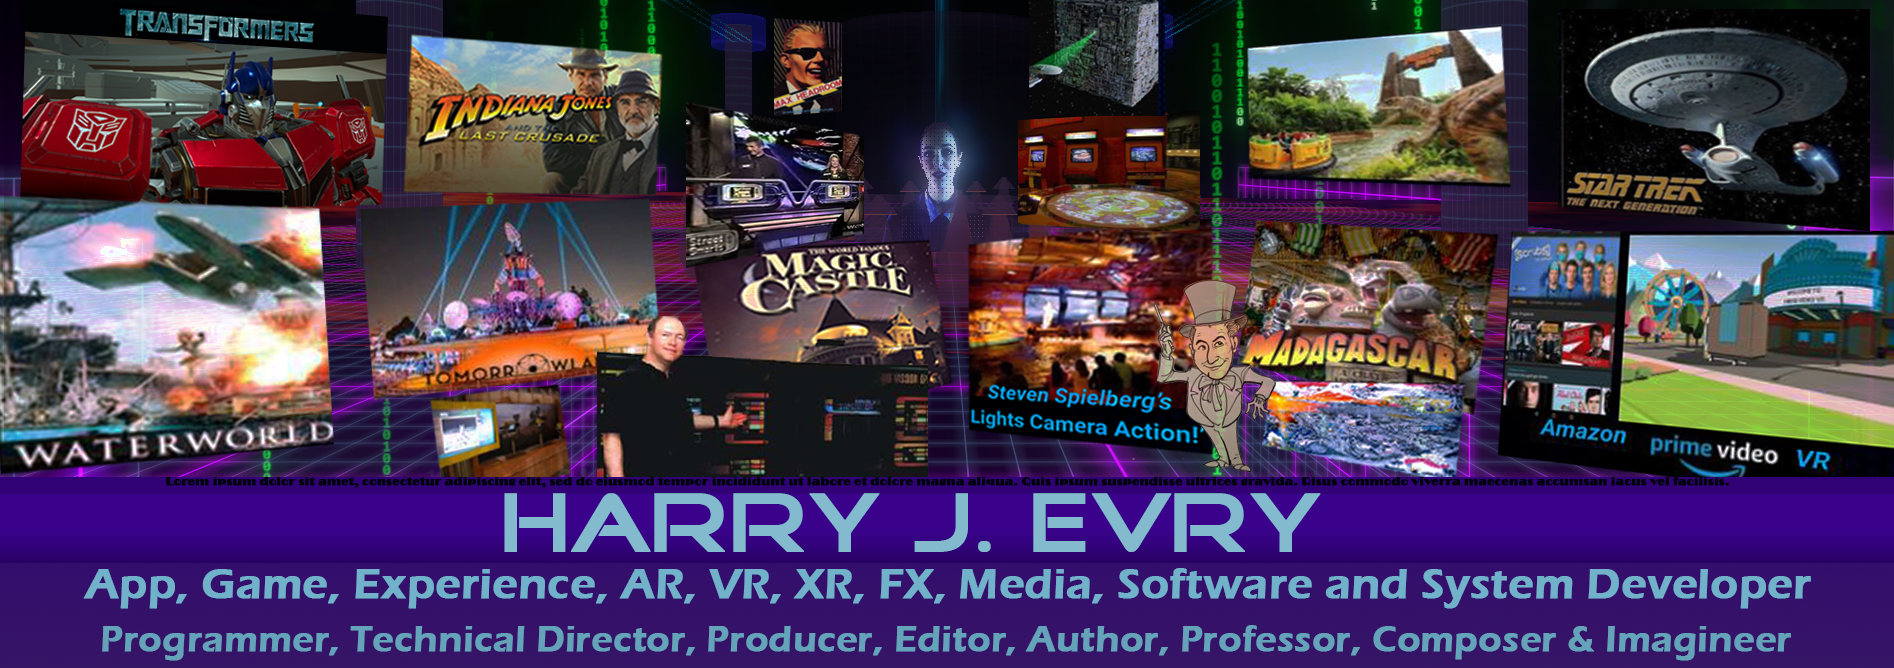 Harry J. Evry, Programmer, Technical Director, Producer, Editor, Author, Professor, Composer & Imagineer